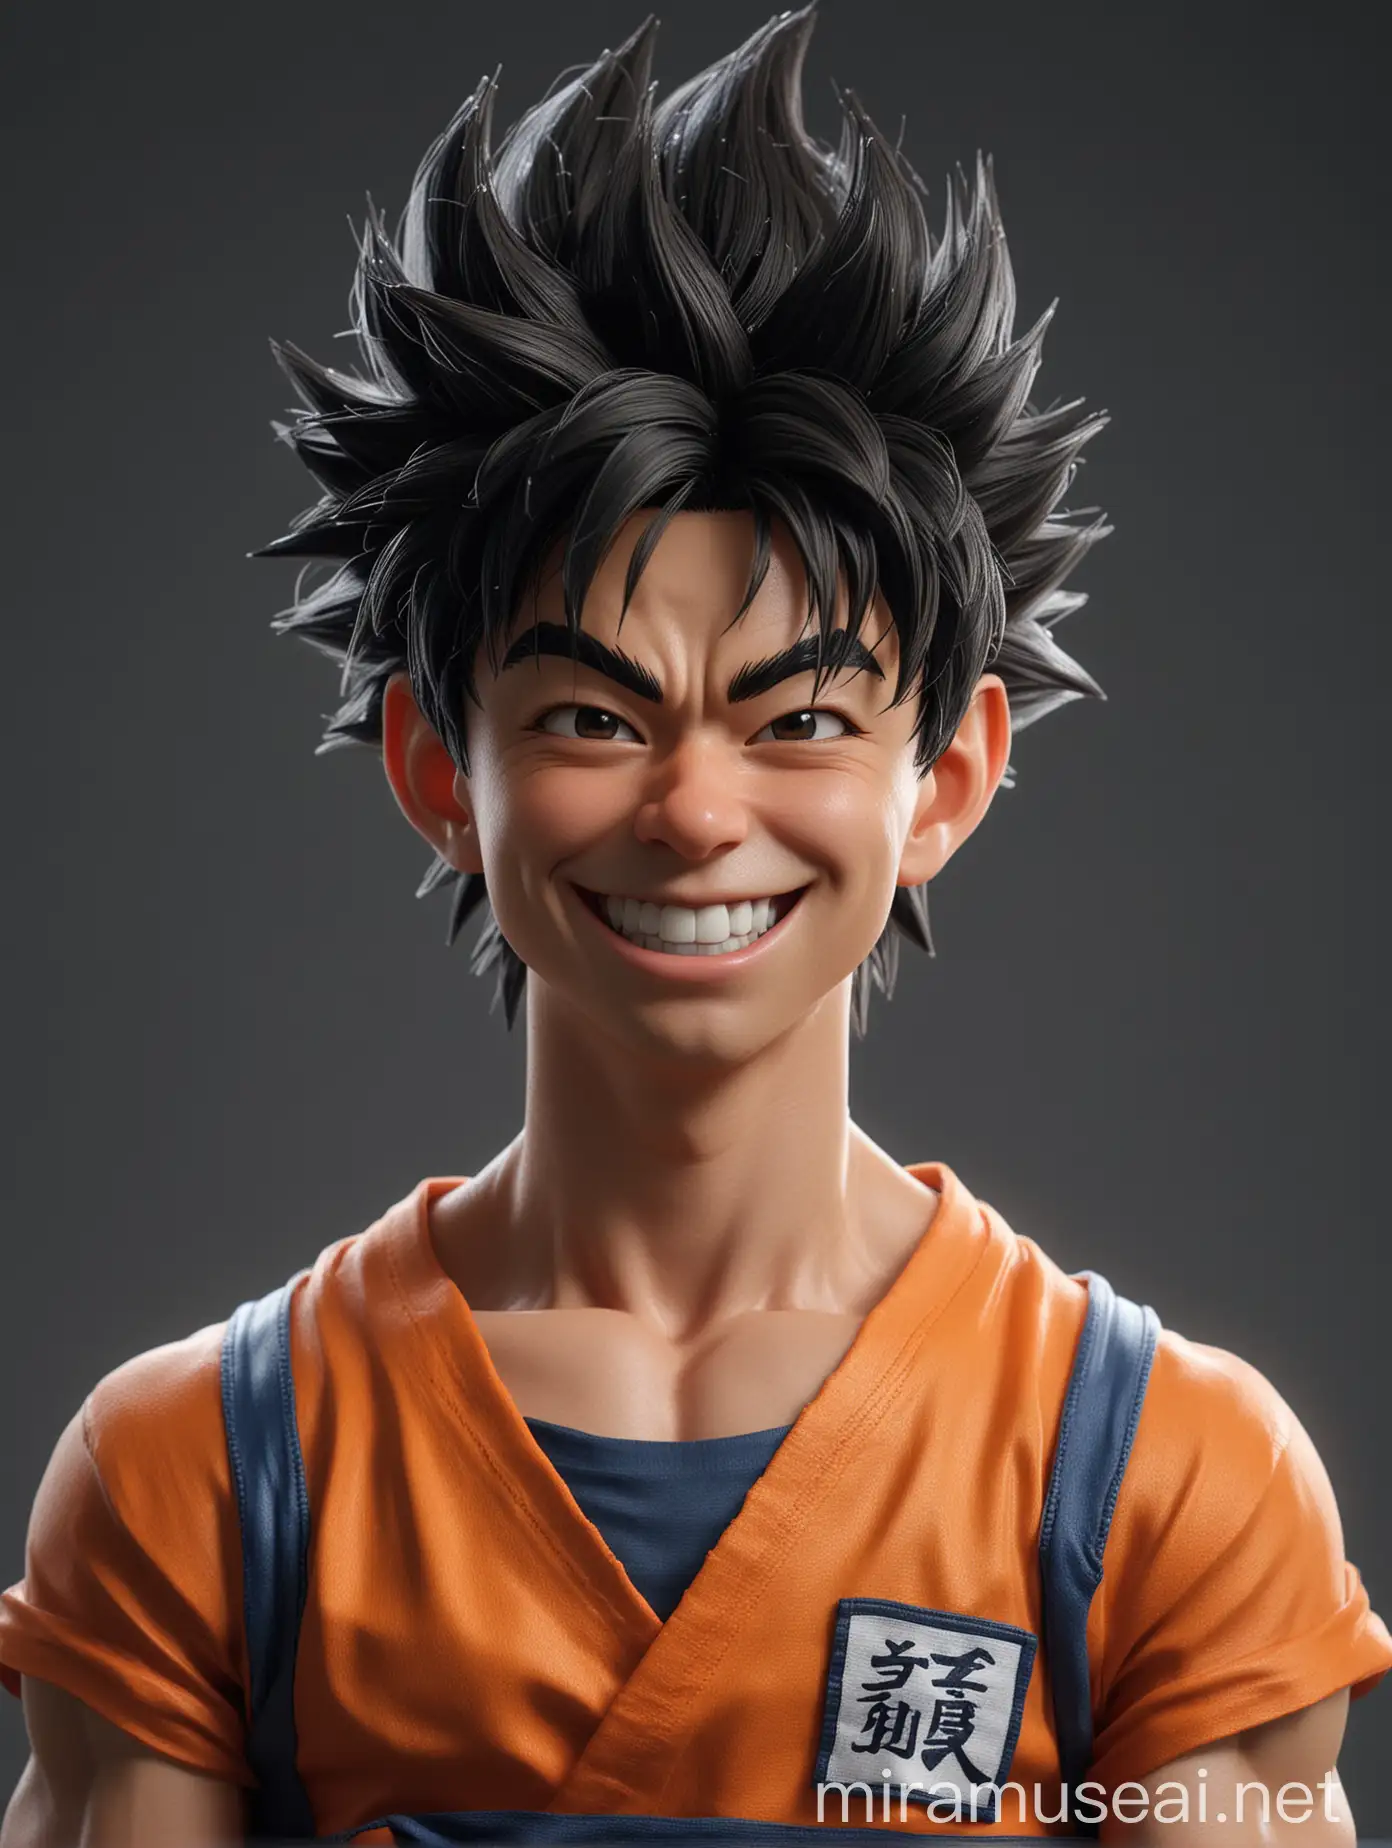 Realistic 8K Portrait of Goku Smiling in Orange Gi